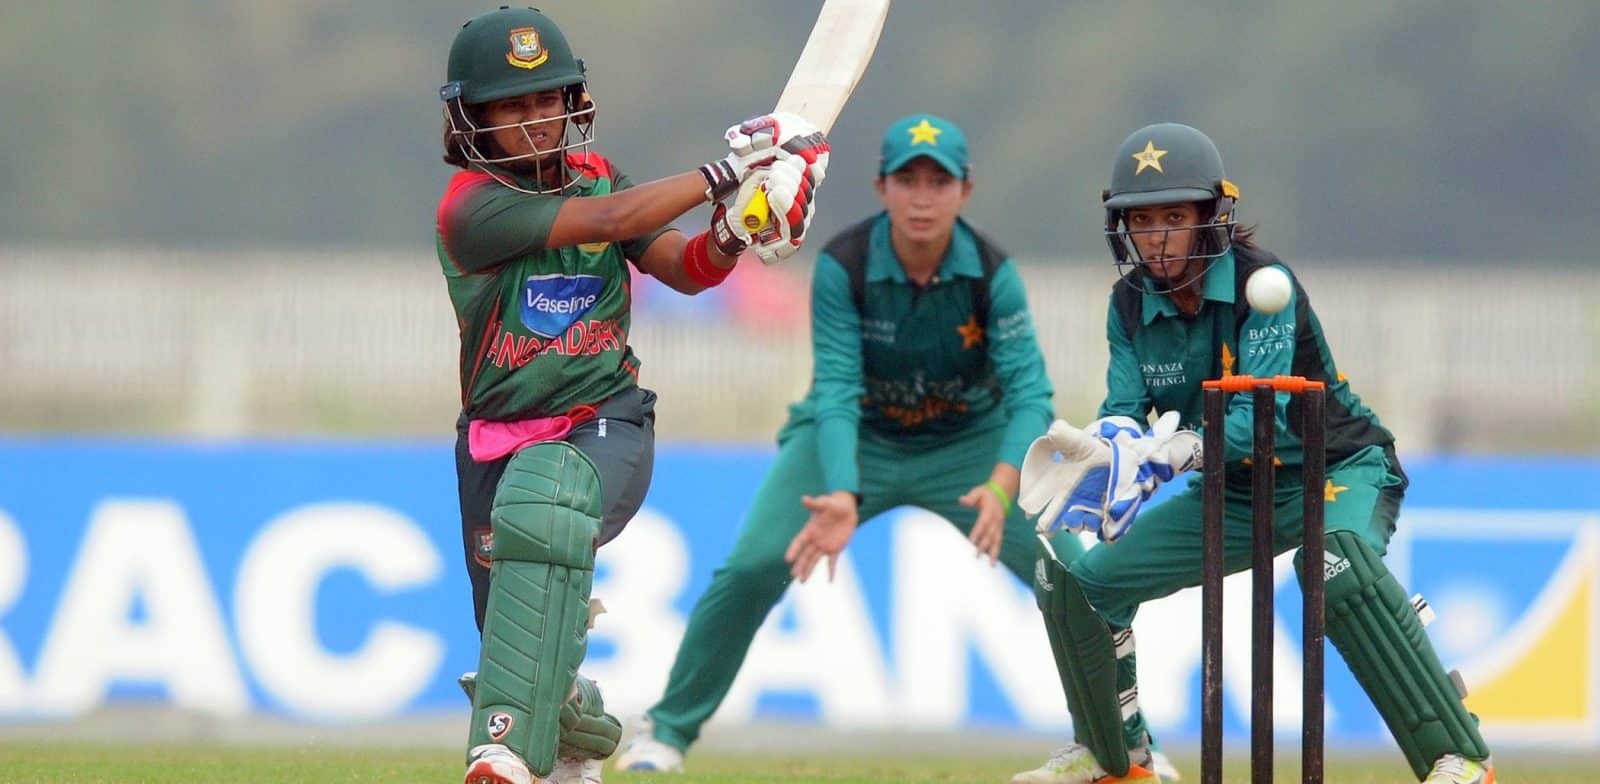 Fargana, Rumana help Bangladesh lift T20 World Cup Qualifiers title